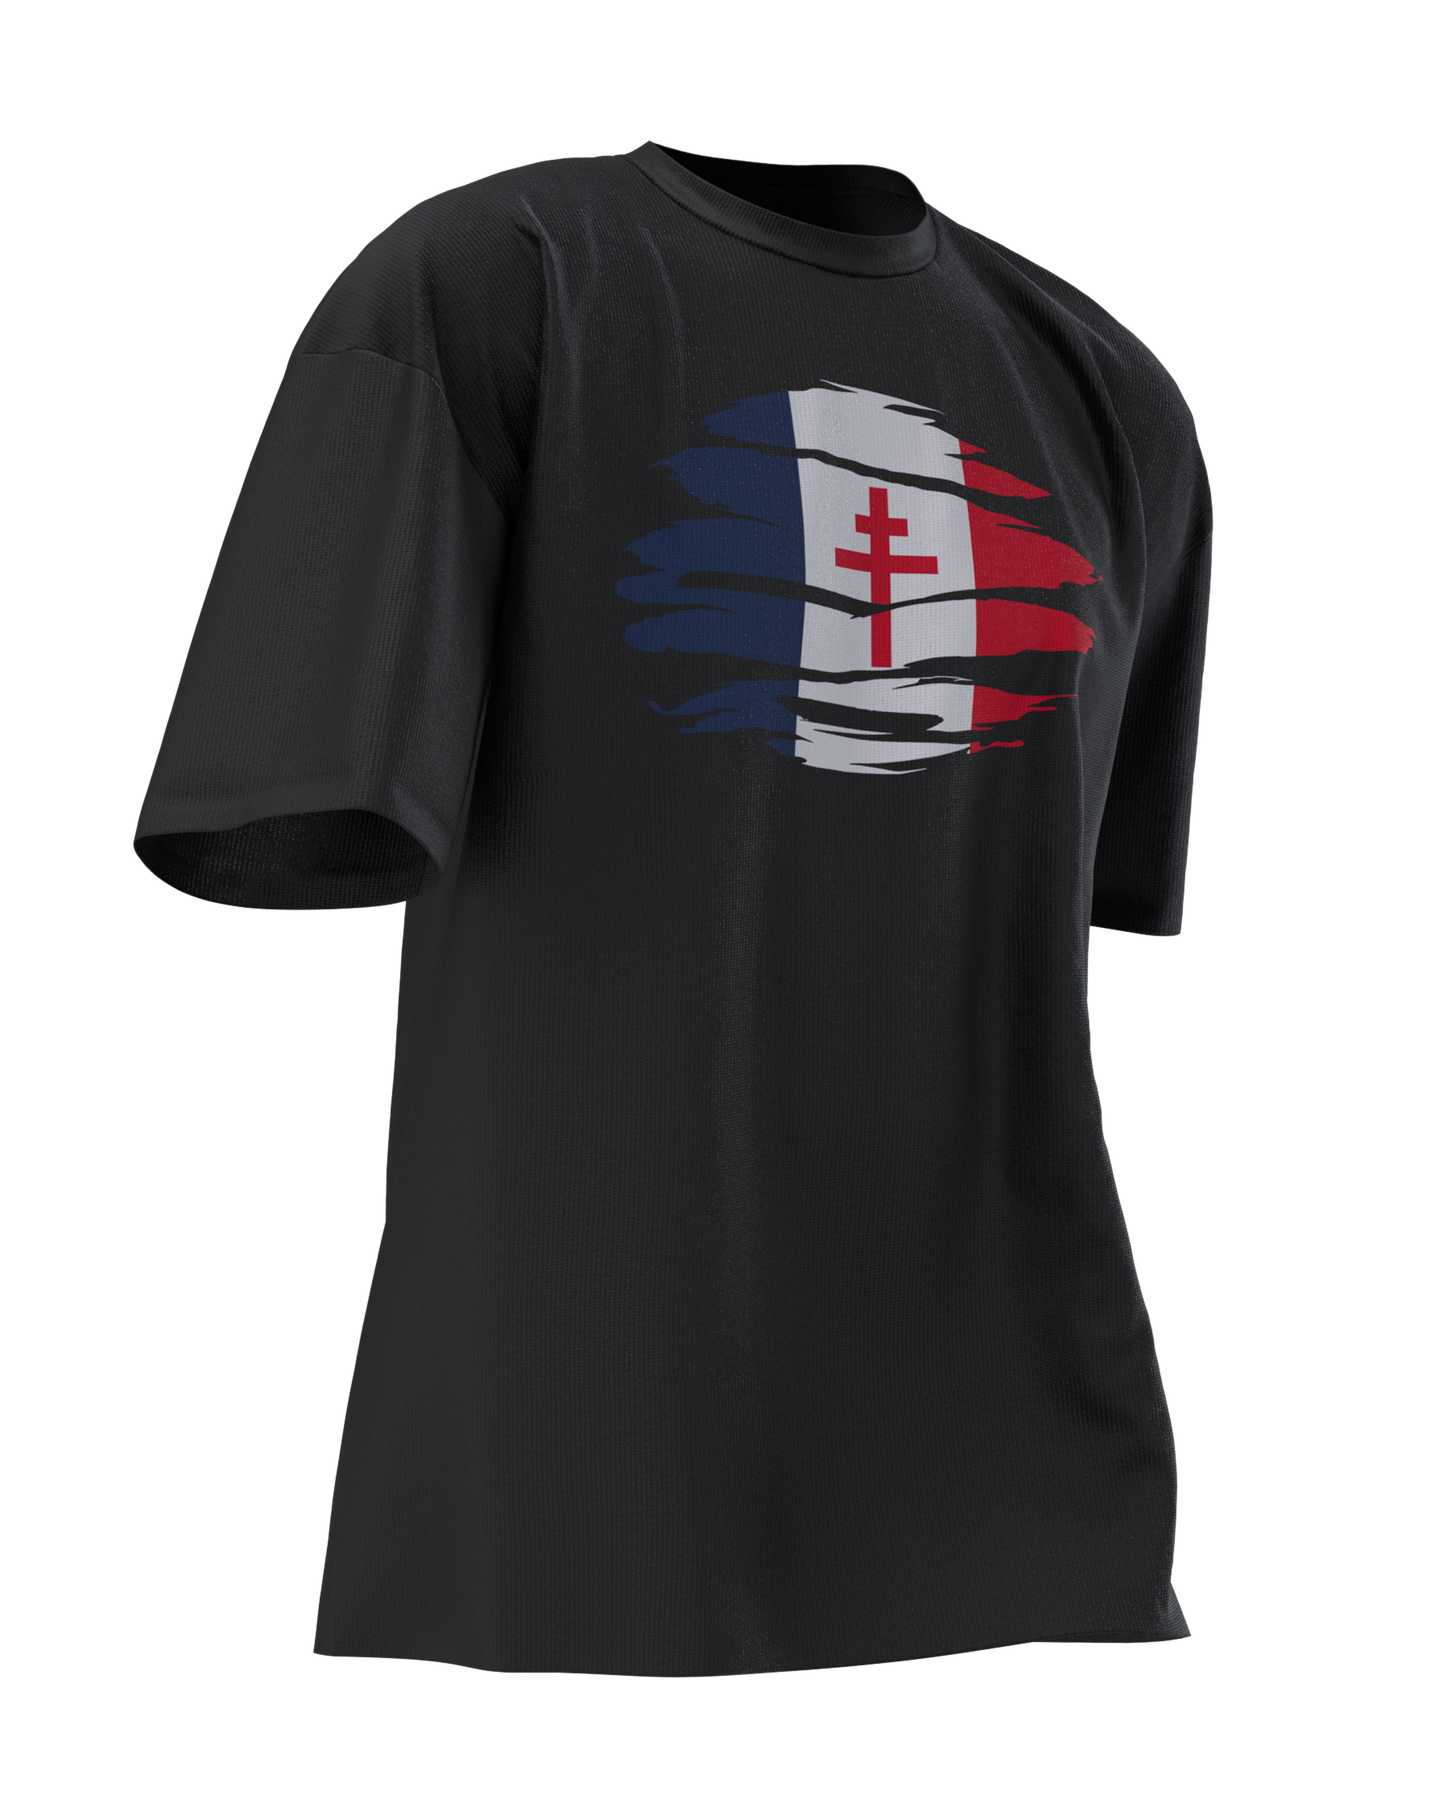 Tee-shirt "France libre" noir